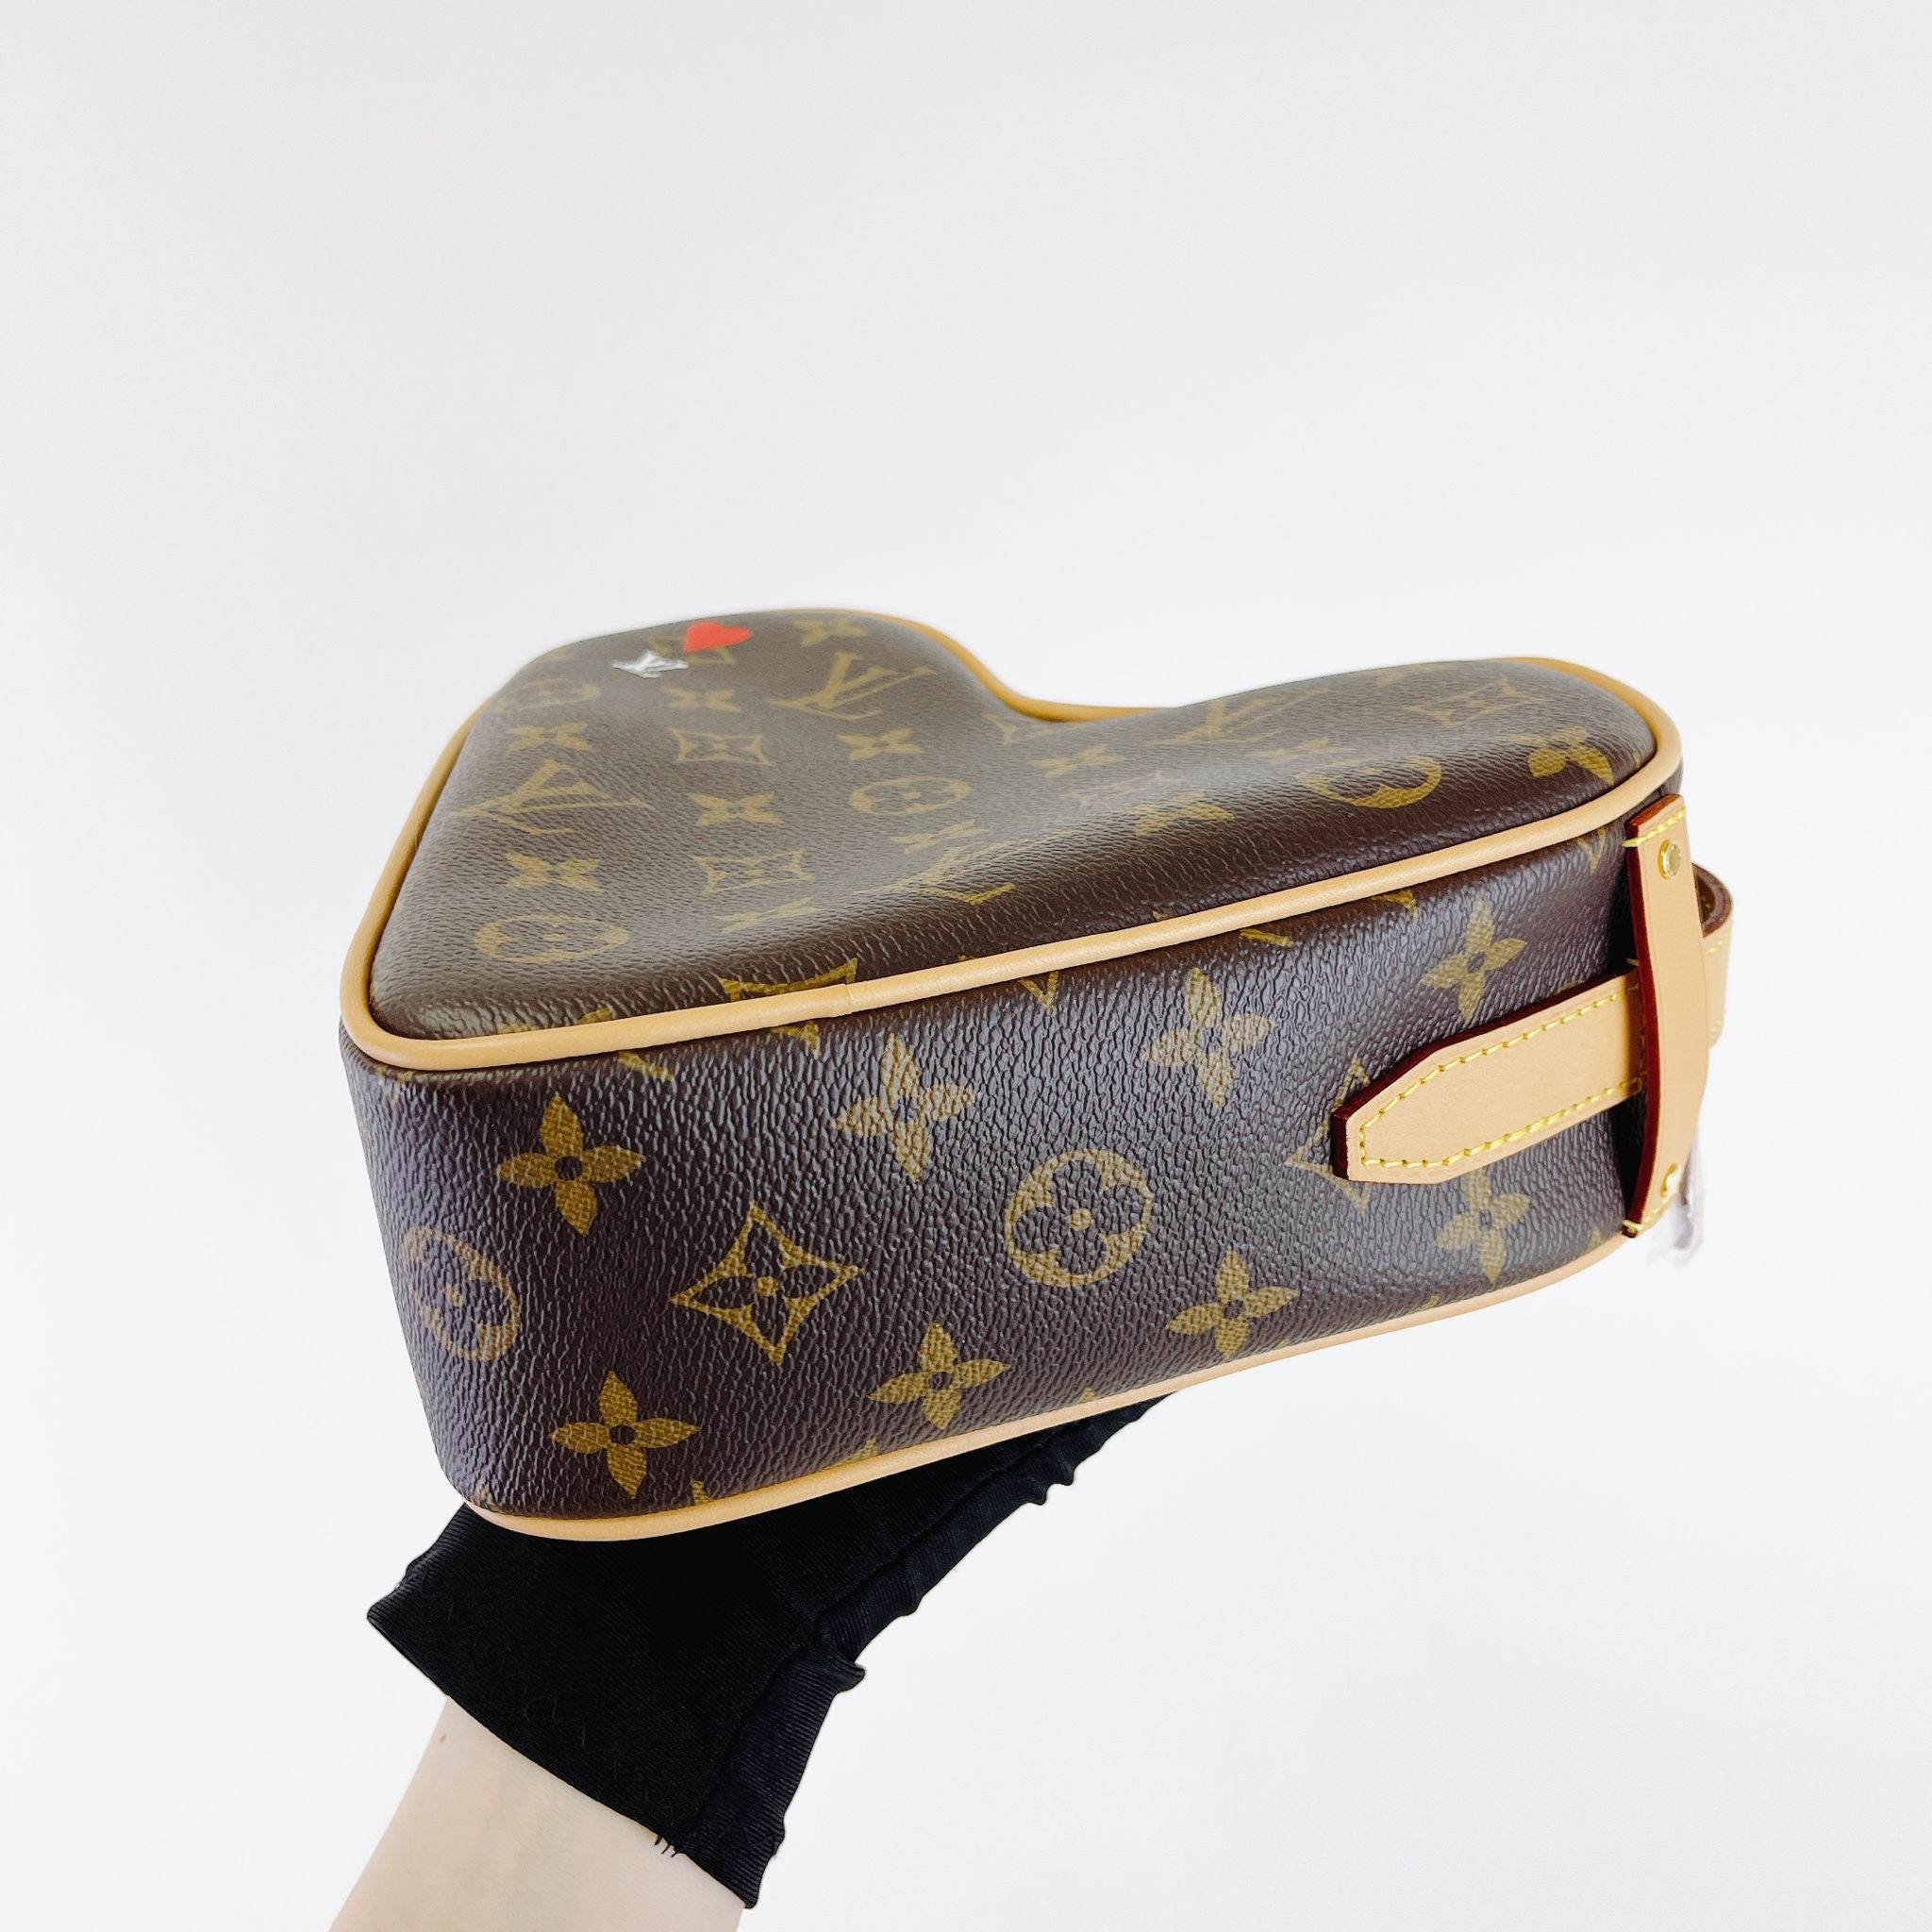 The gate ftw 🙌 This Louis Vuitton Coeur Heart Bag is roomier than